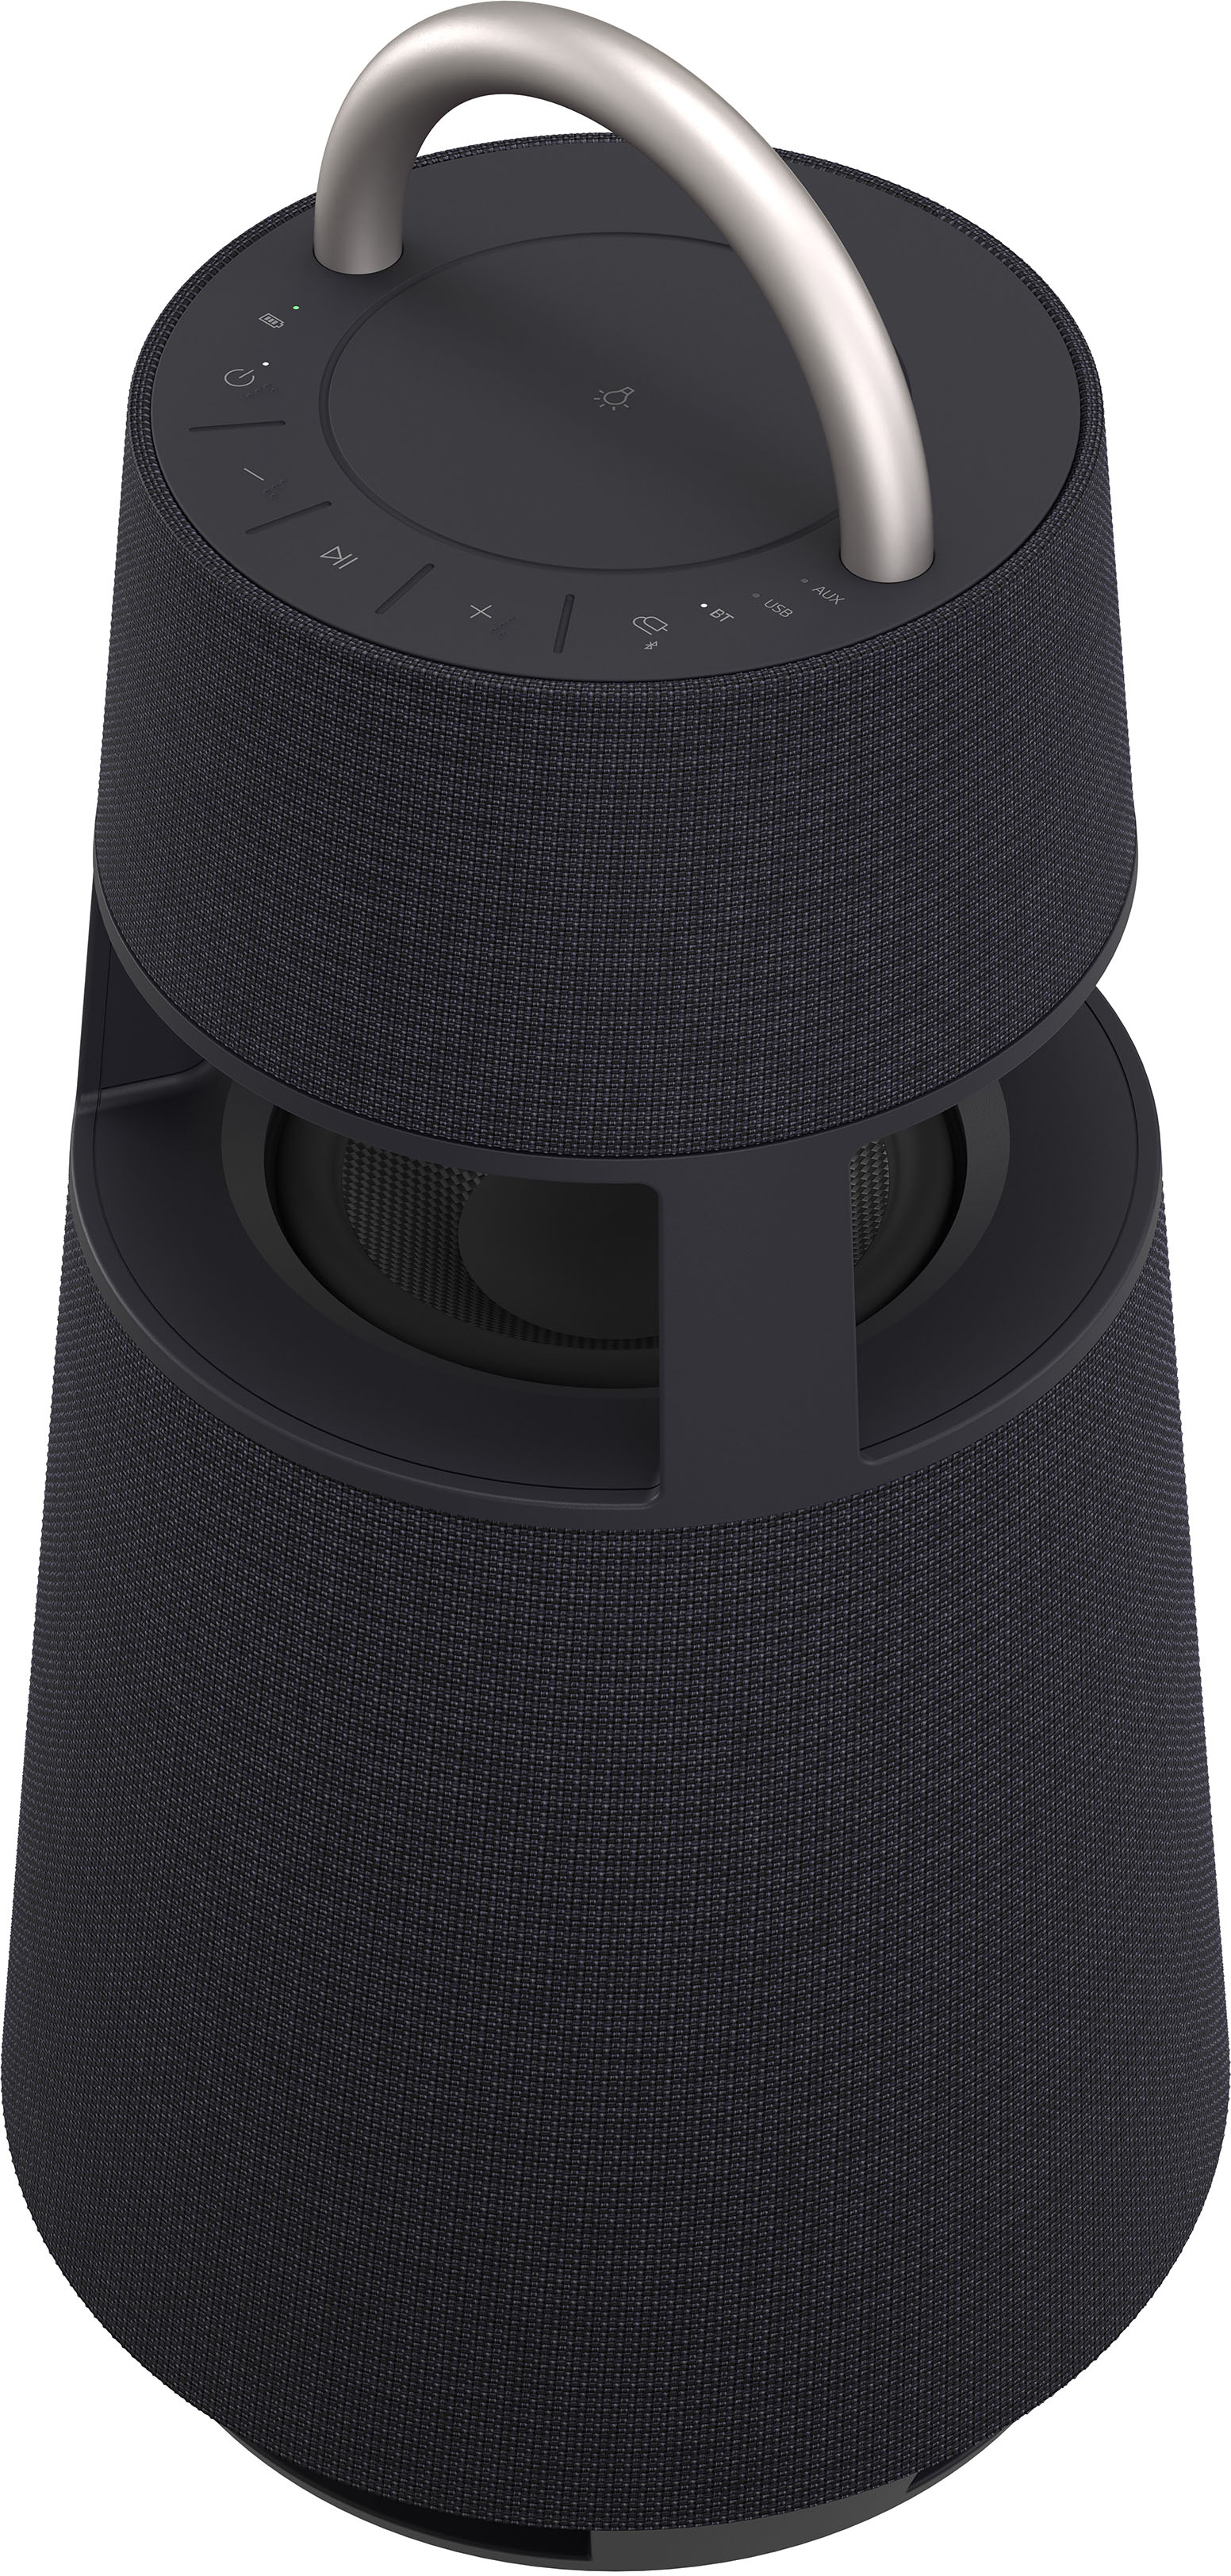 Best Buy: LG XBOOM 360 Portable Bluetooth Omnidirectional Speaker Black RP4B